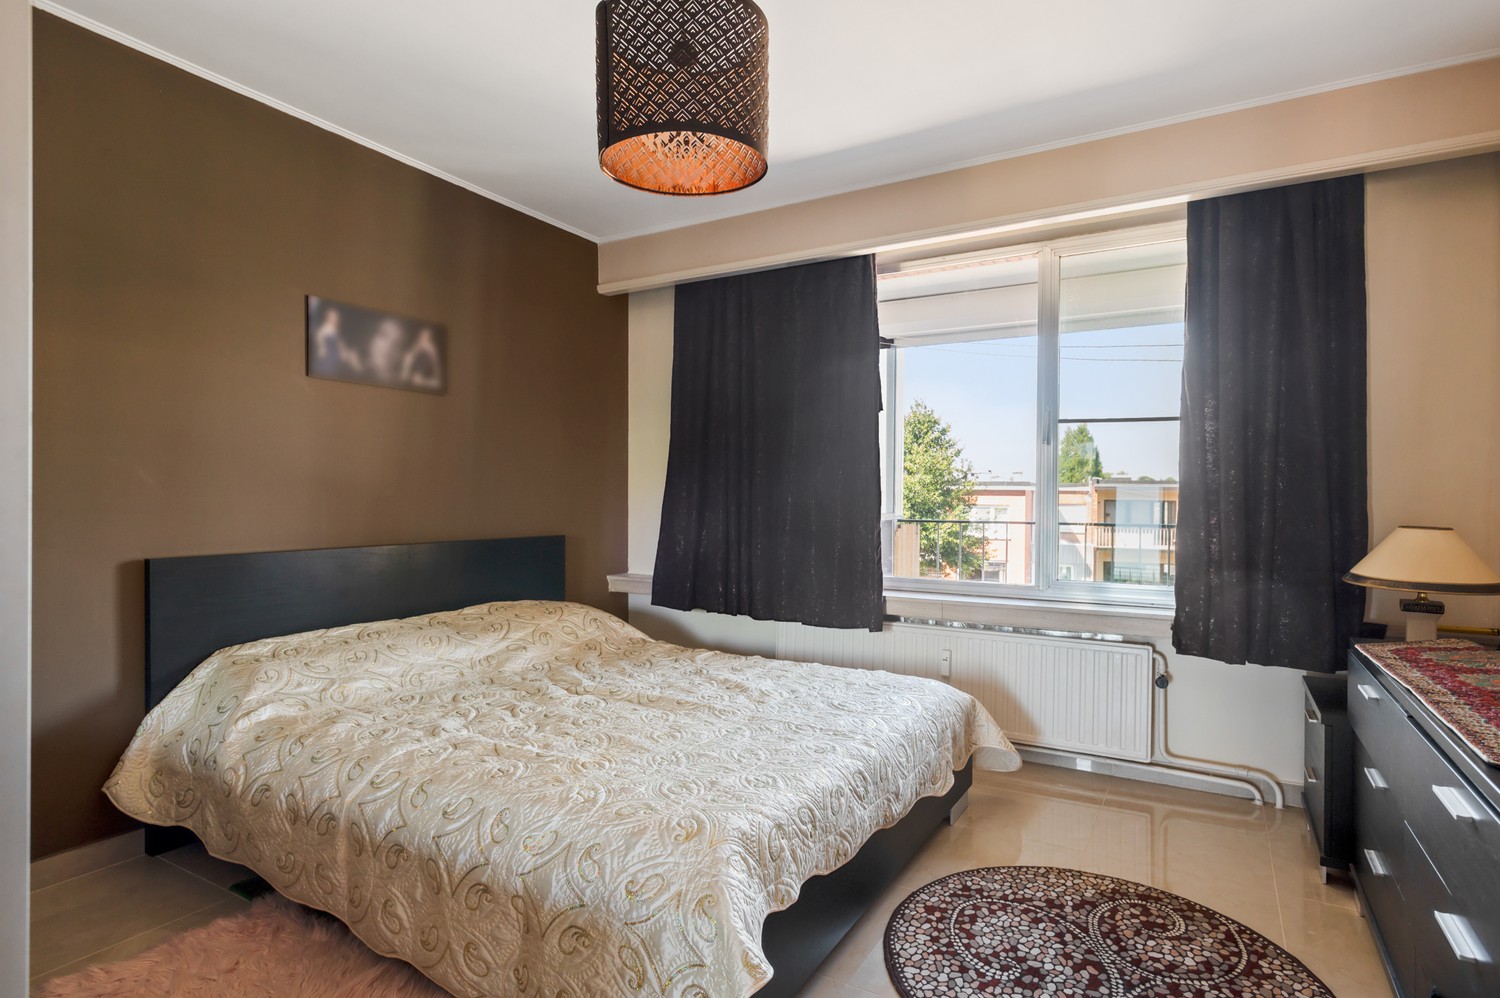 Instapklaar appartement met twee slaapkamers en ruim terras in Deurne! afbeelding 10